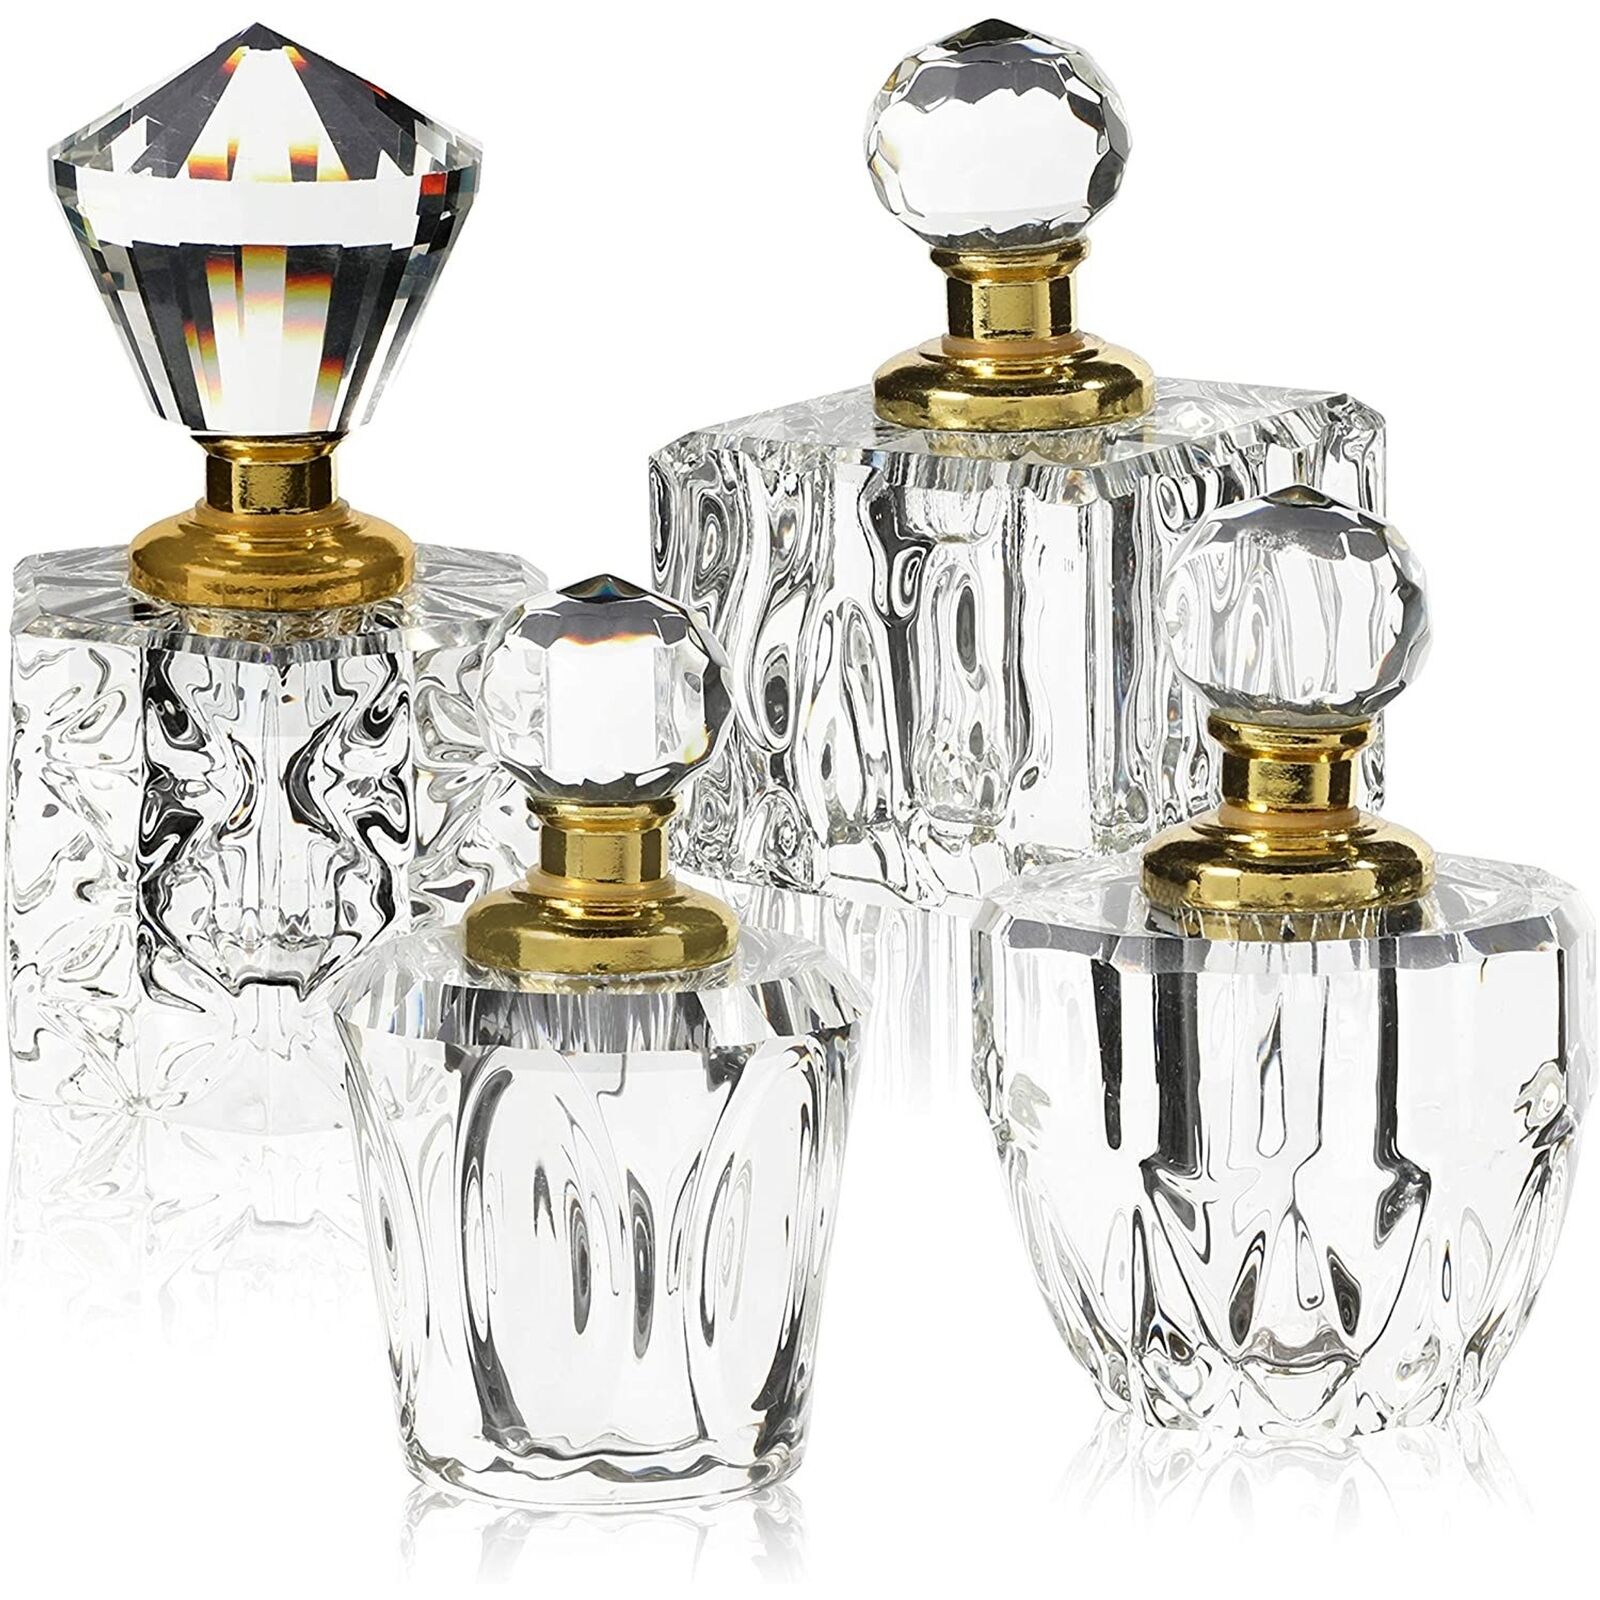 4 Pack Crystal Perfume Bottle Set in 4 Unique Designs, Empty Refillable Bottles